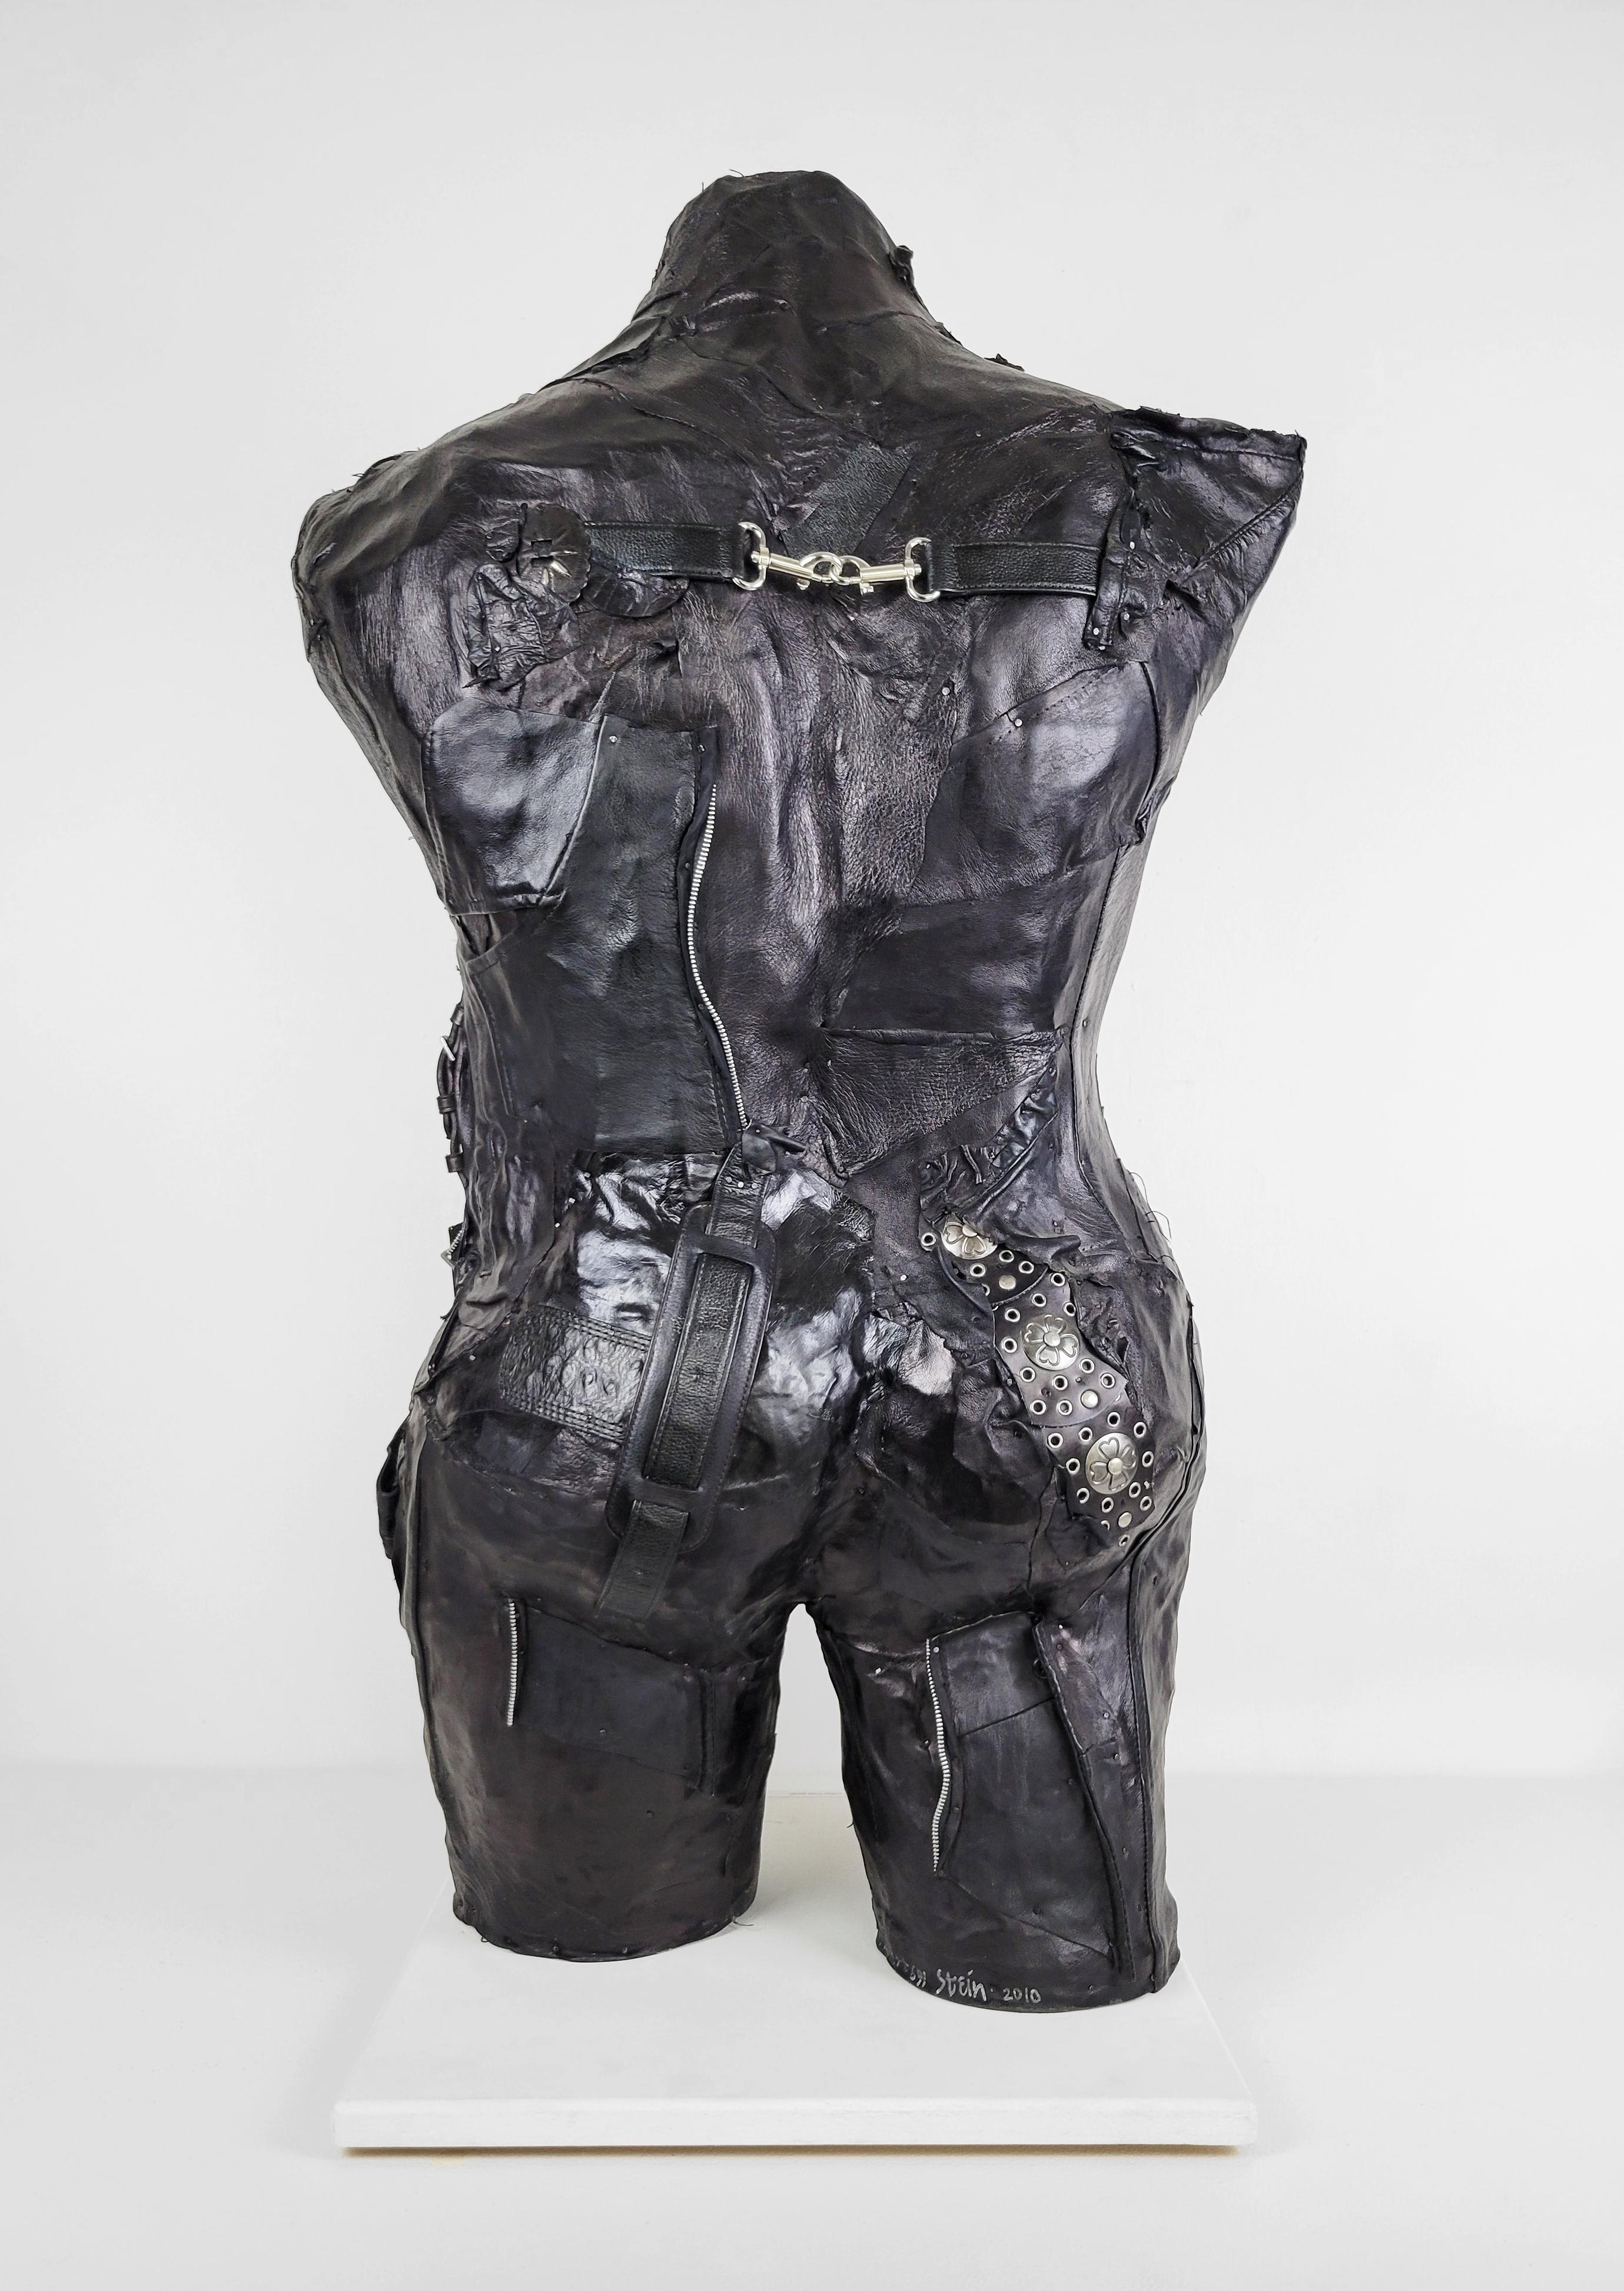 Feminist Contemporary Black/Silver Leather Metal Torso Sculpture - On Alert 691  For Sale 1